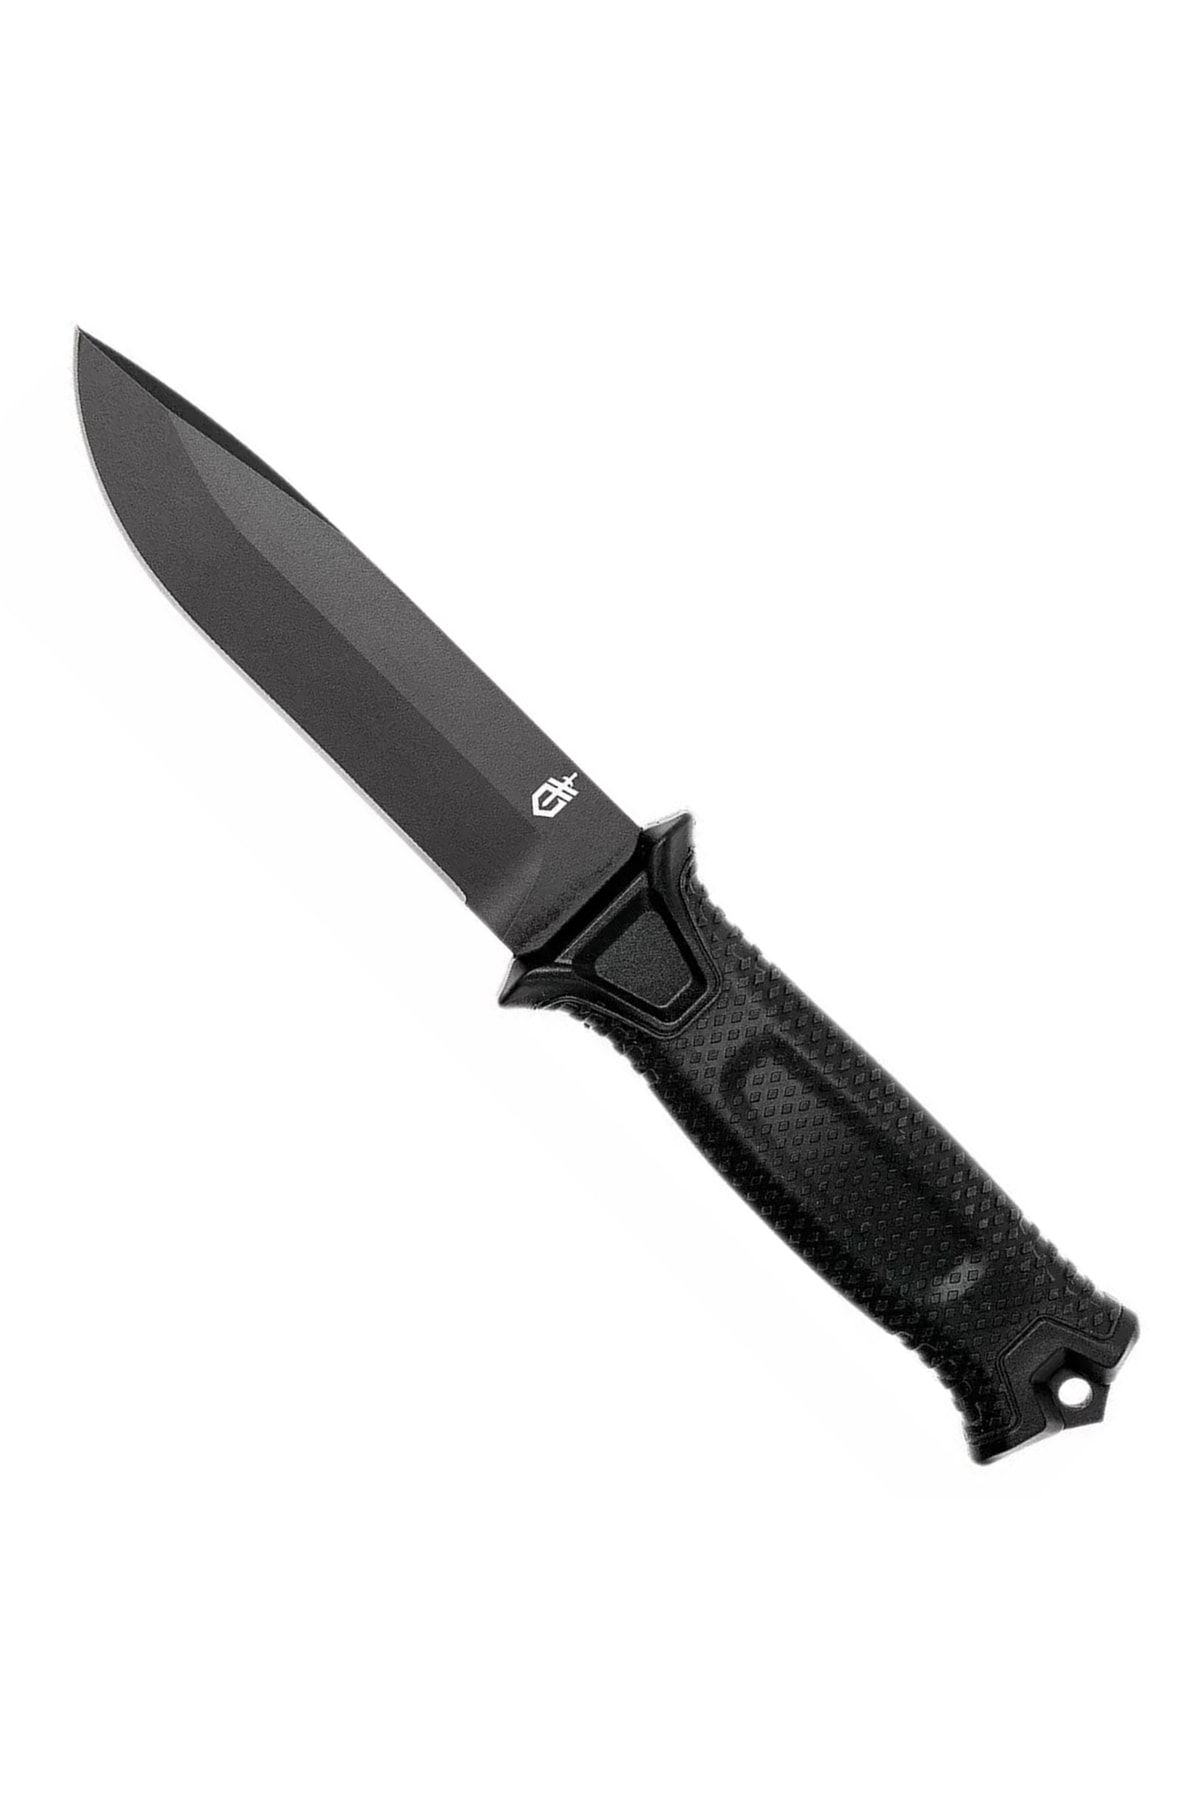 Gerber Strongarm Tactical Knife (black)